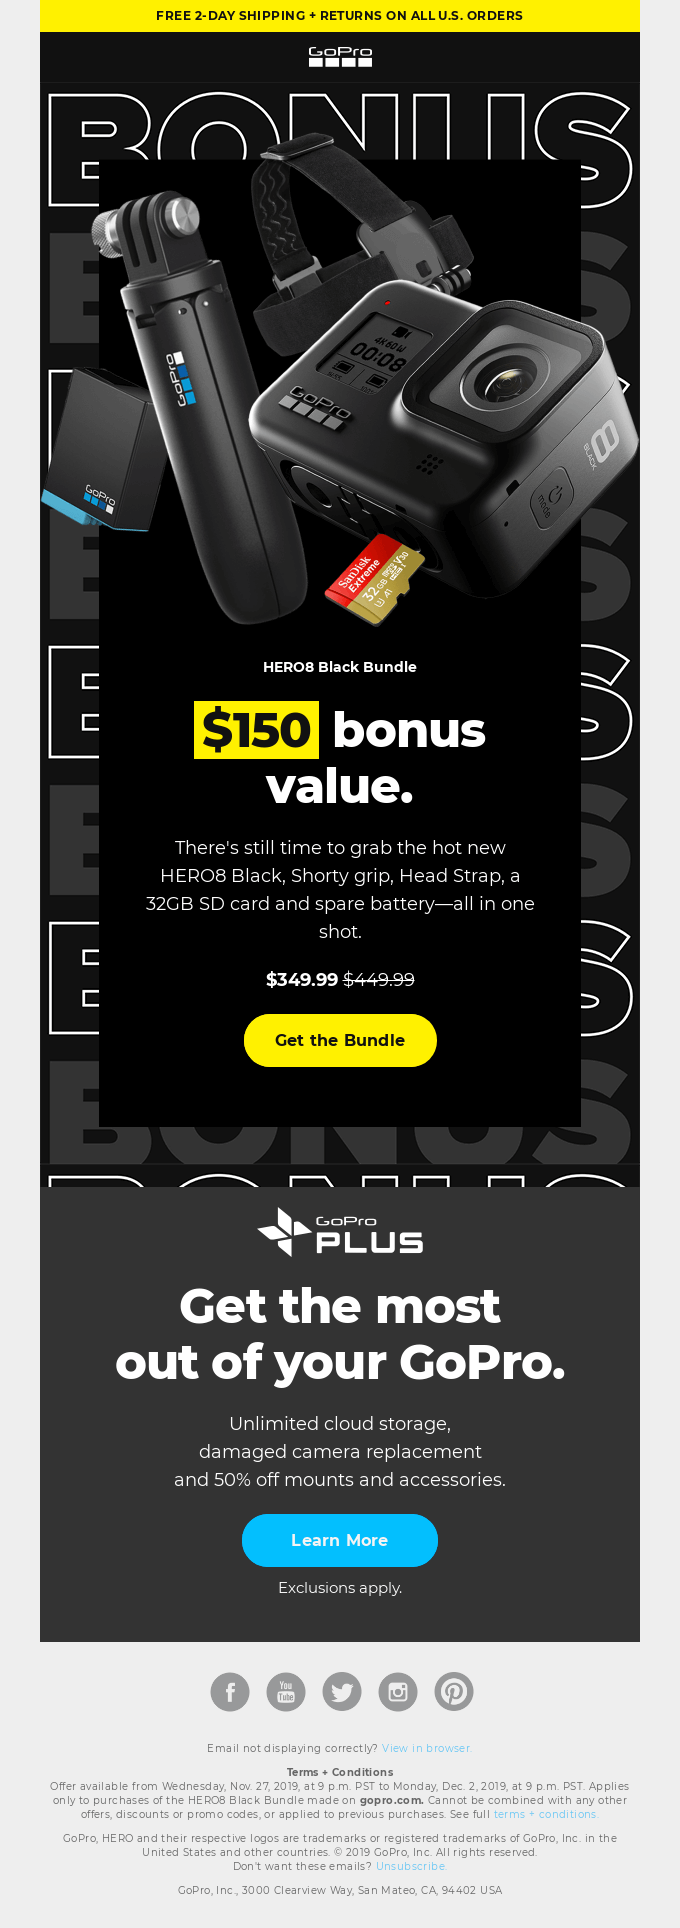 Reminder: $150 Black Friday bonus value